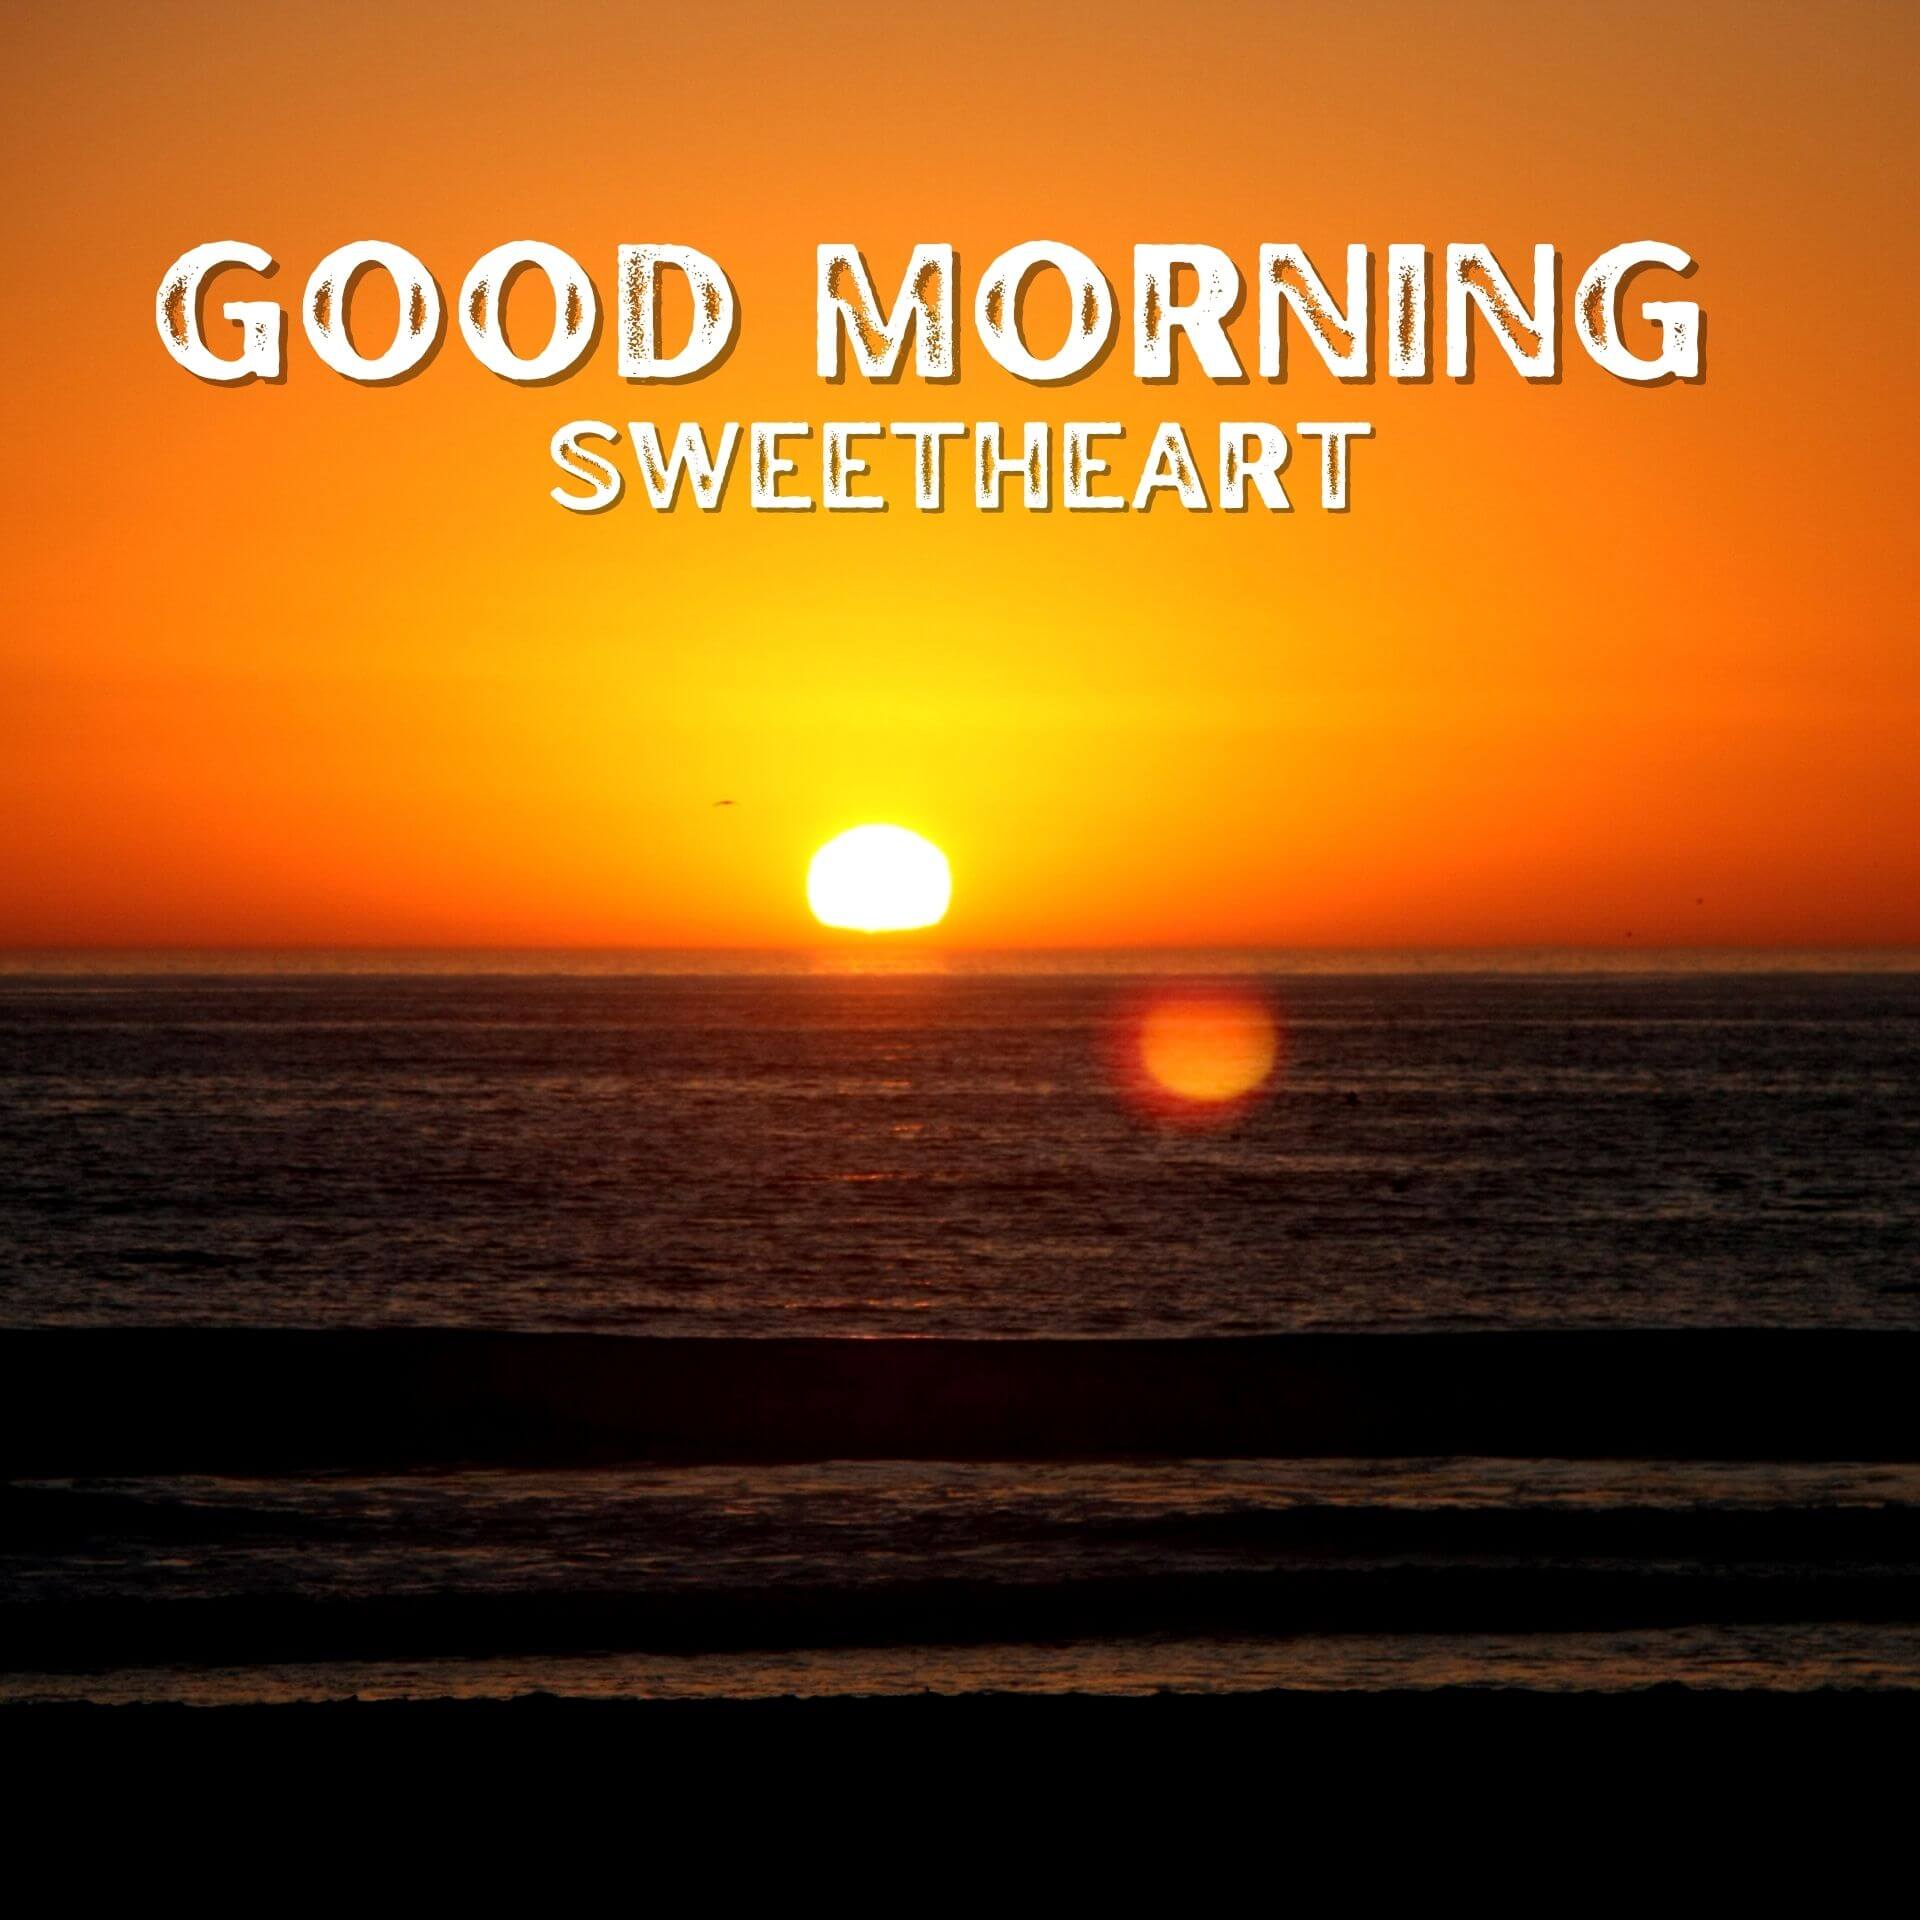 Sunrise Romantic Good Morning Pics Wallpaper Download